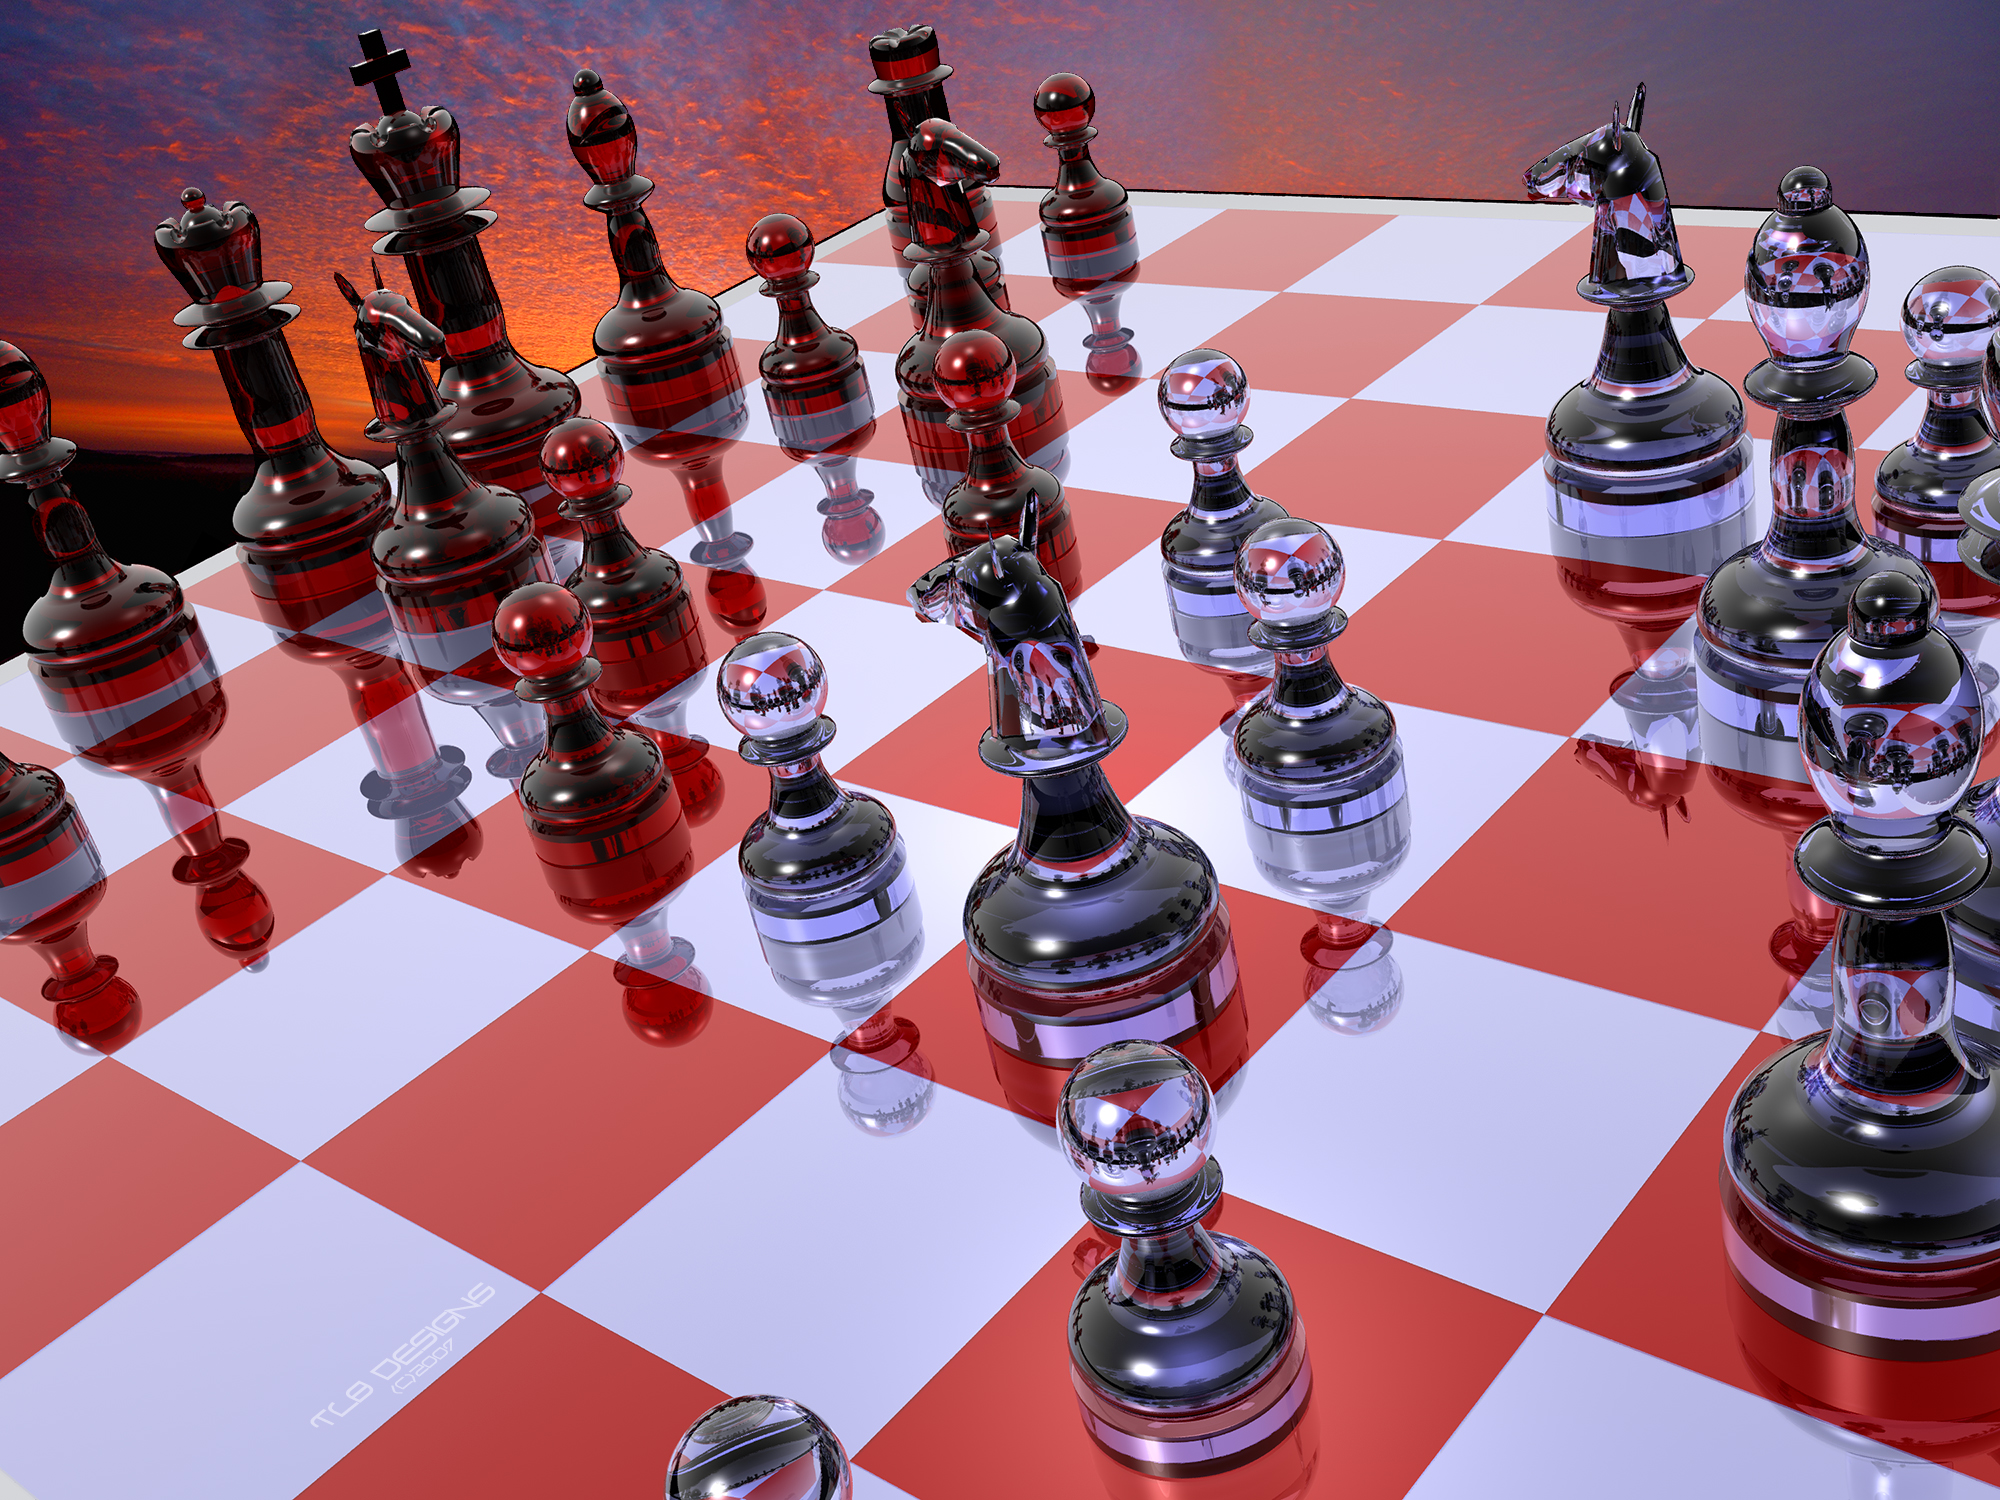 King's Chess (4K Wallpaper) by Jimking on DeviantArt